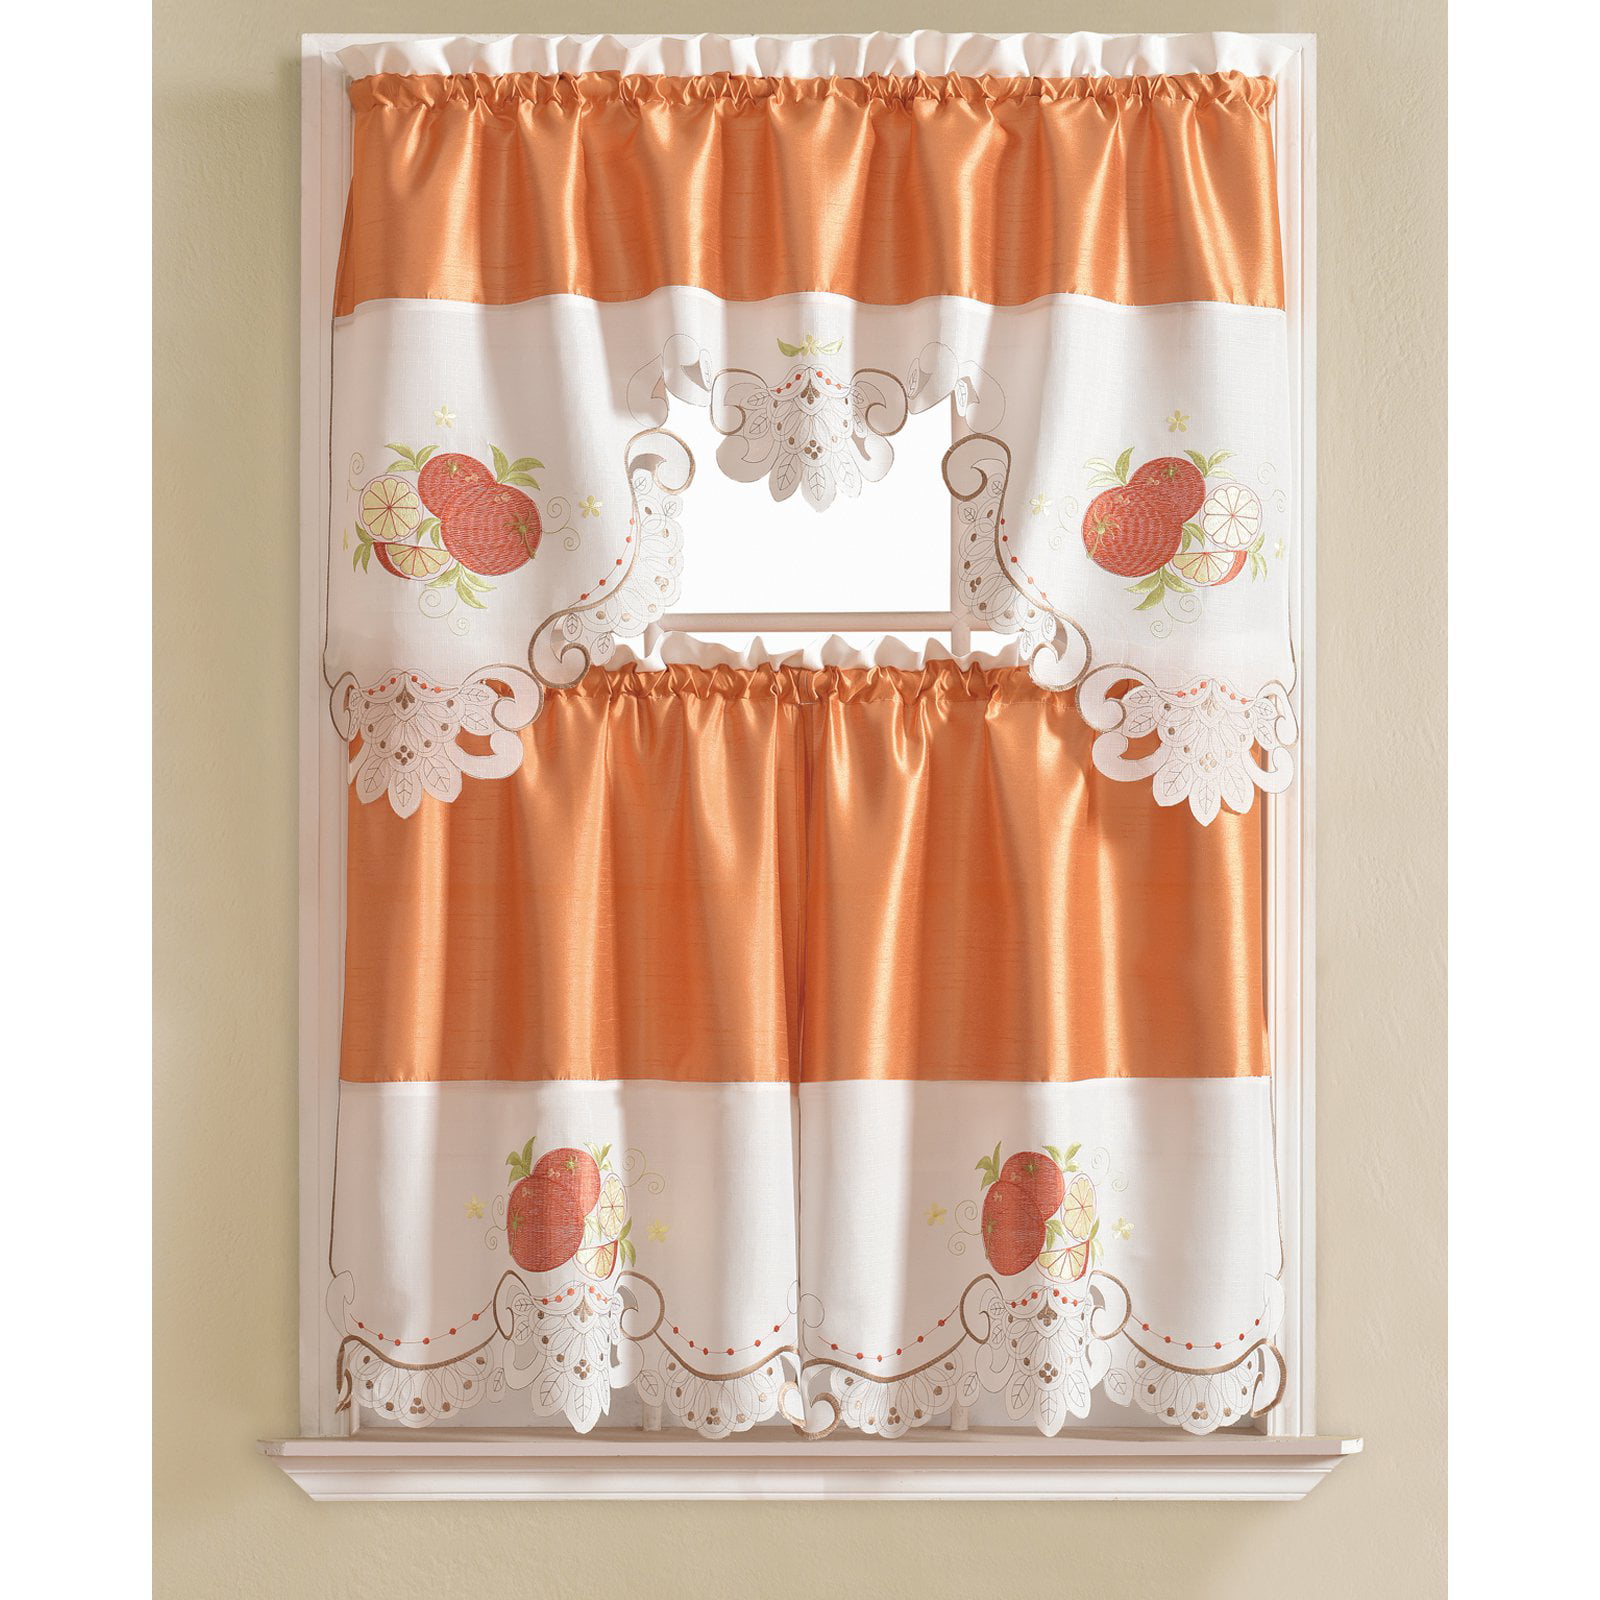 Noble Embroidered Orange Tier And Valance Kitchen Curtain Set Walmartcom Walmartcom